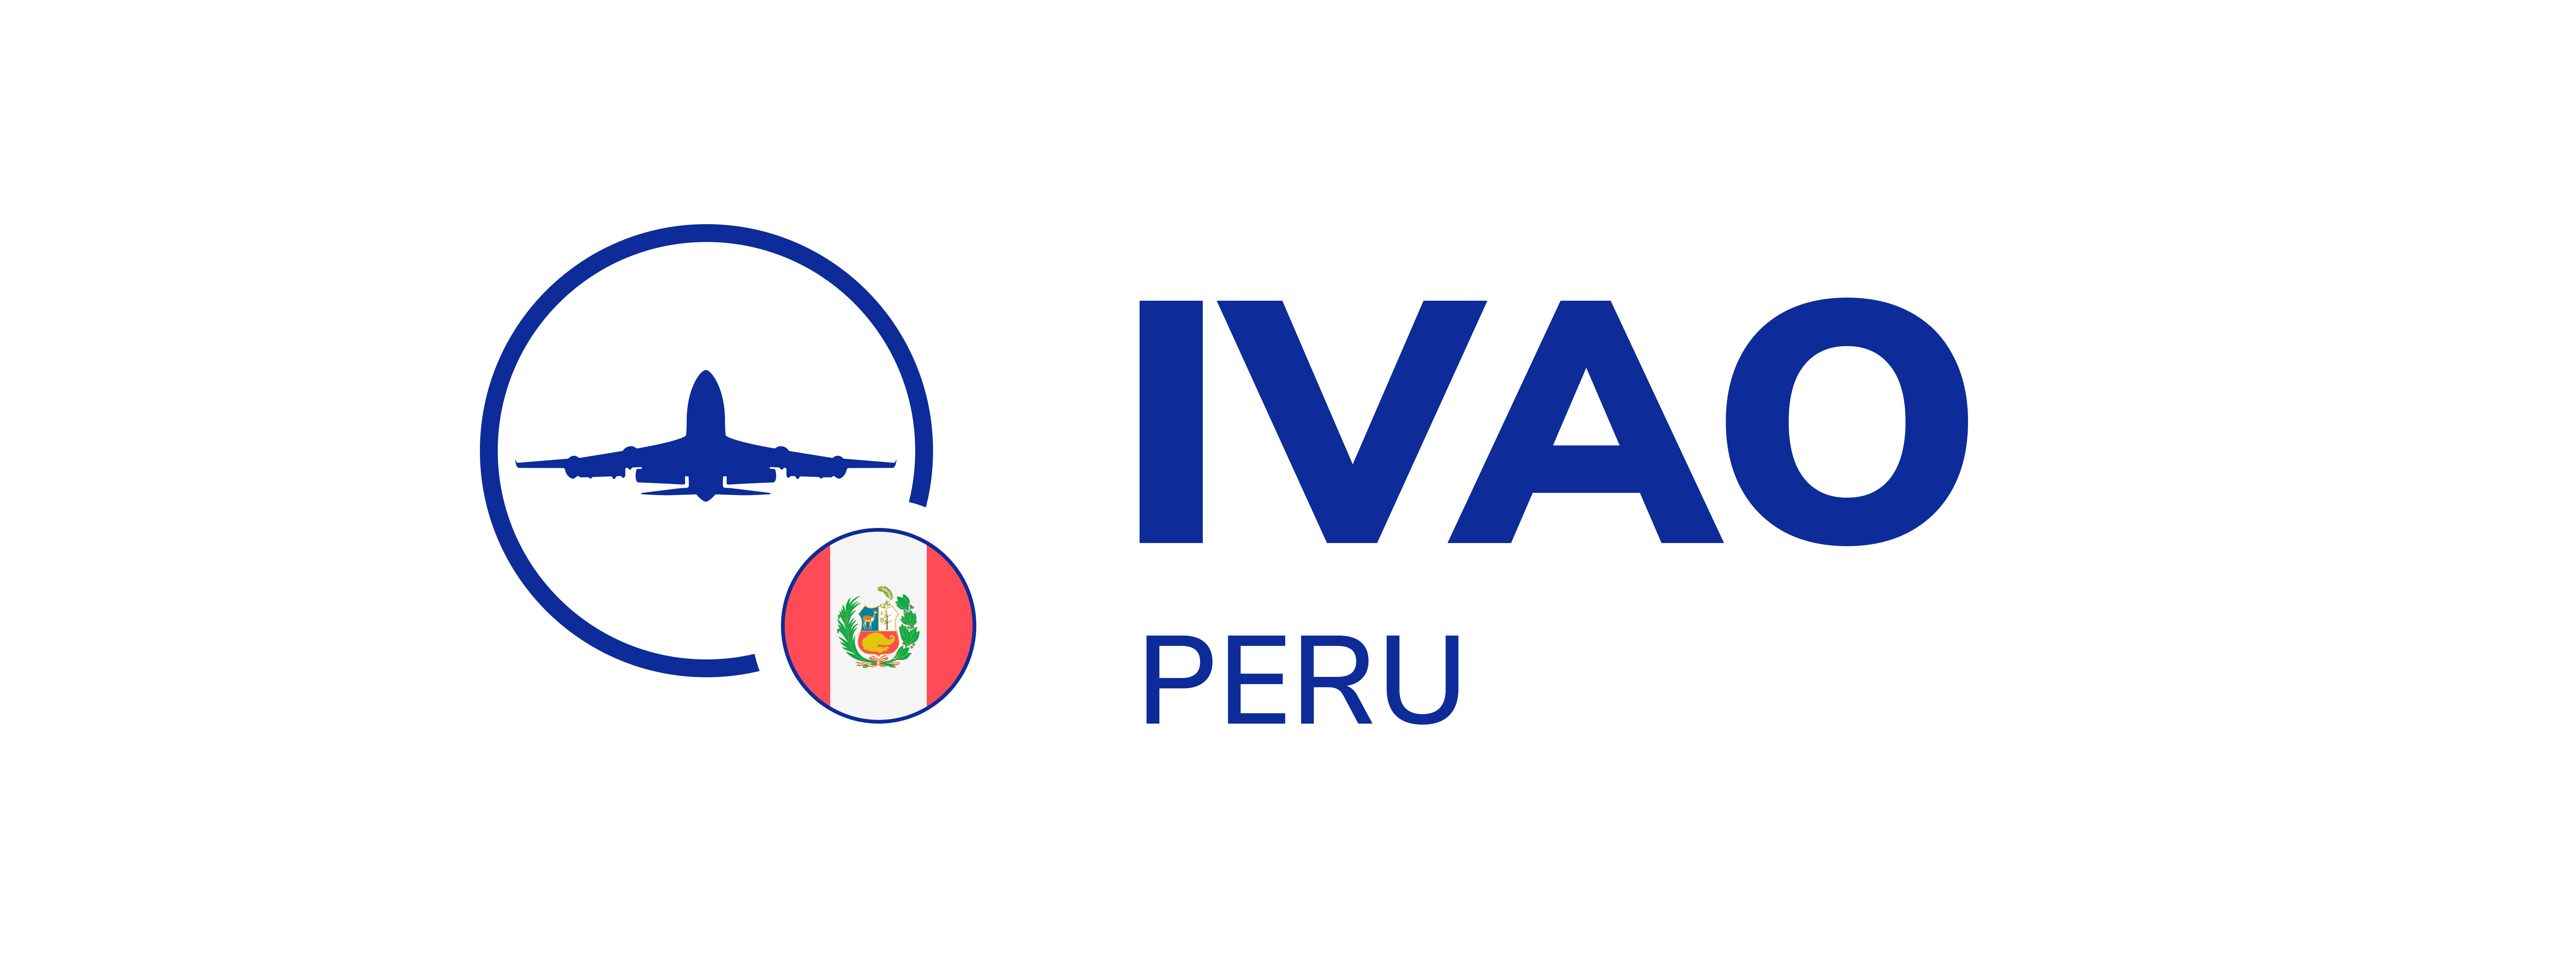 IVAO Peru Support Center